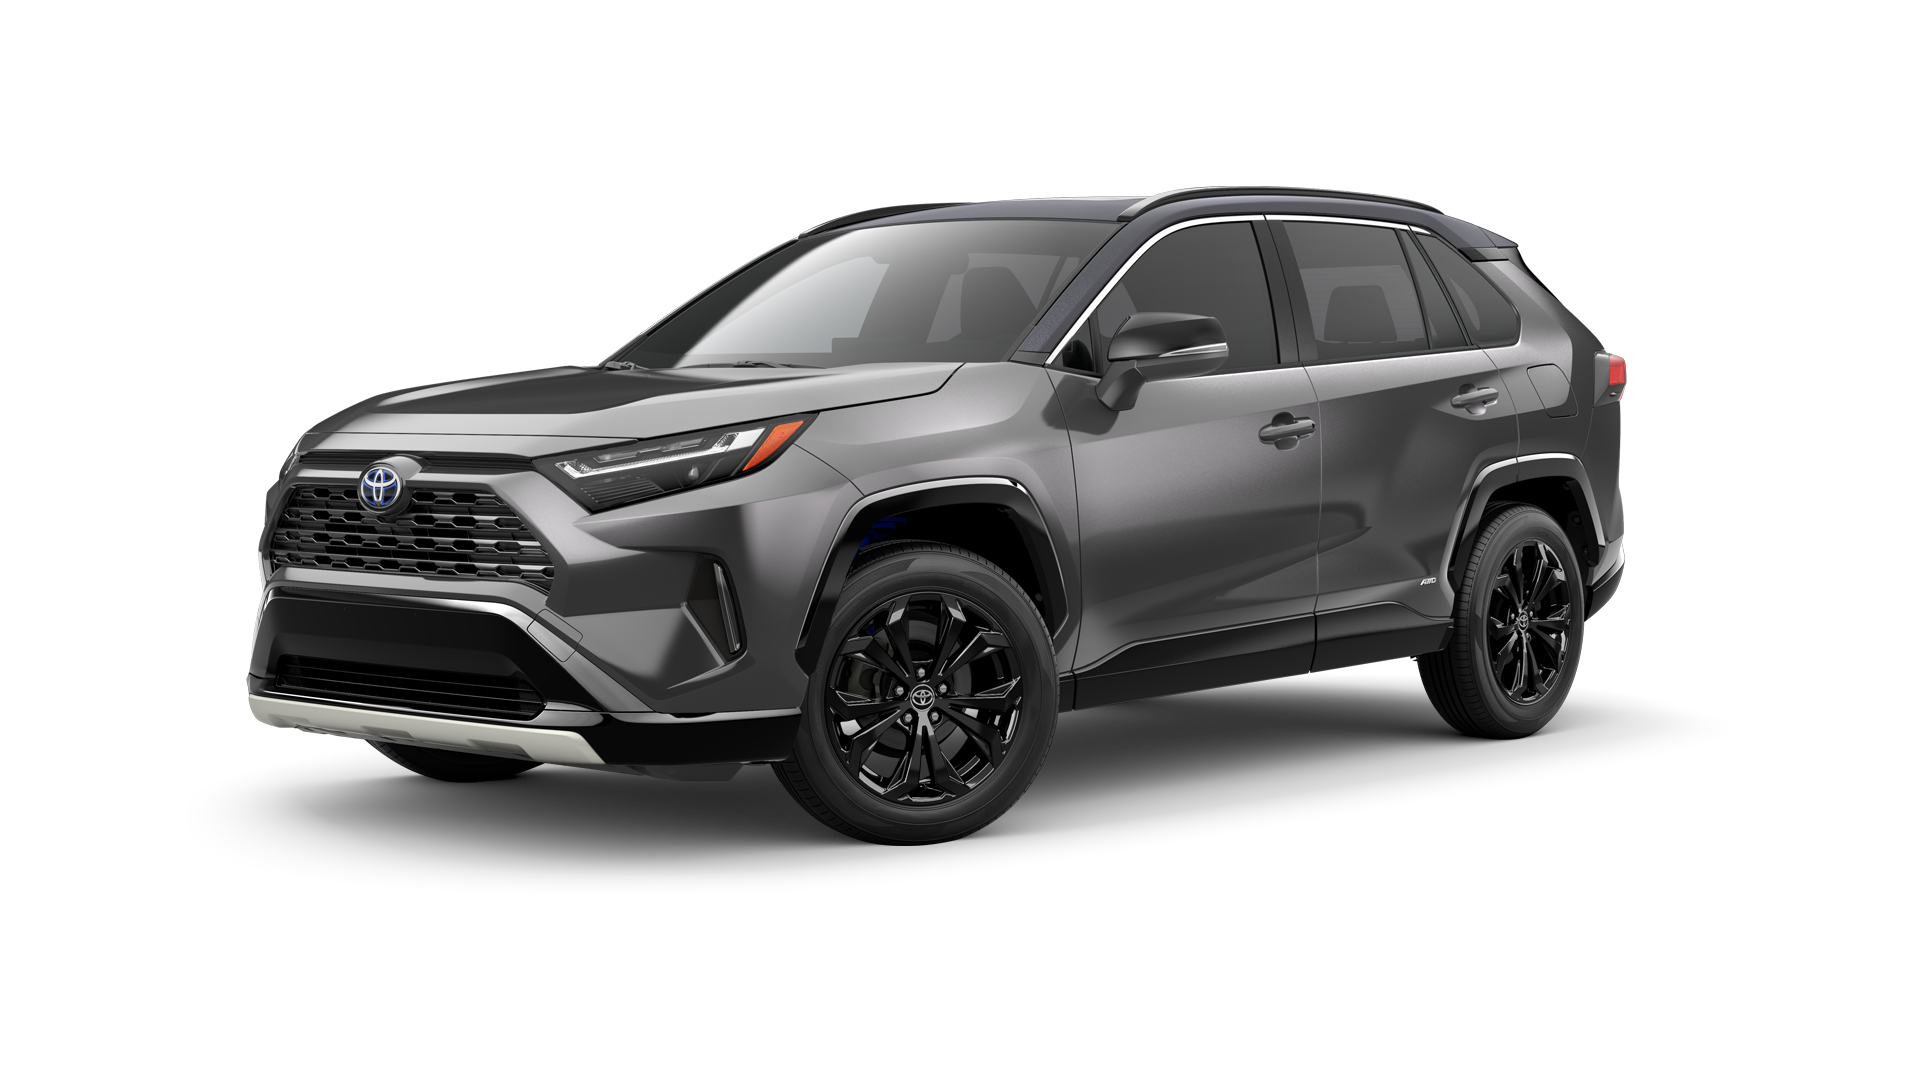 2024 Toyota Hybrid in Magnetic Gray Metallic/Midnight Black Metallic Roof.